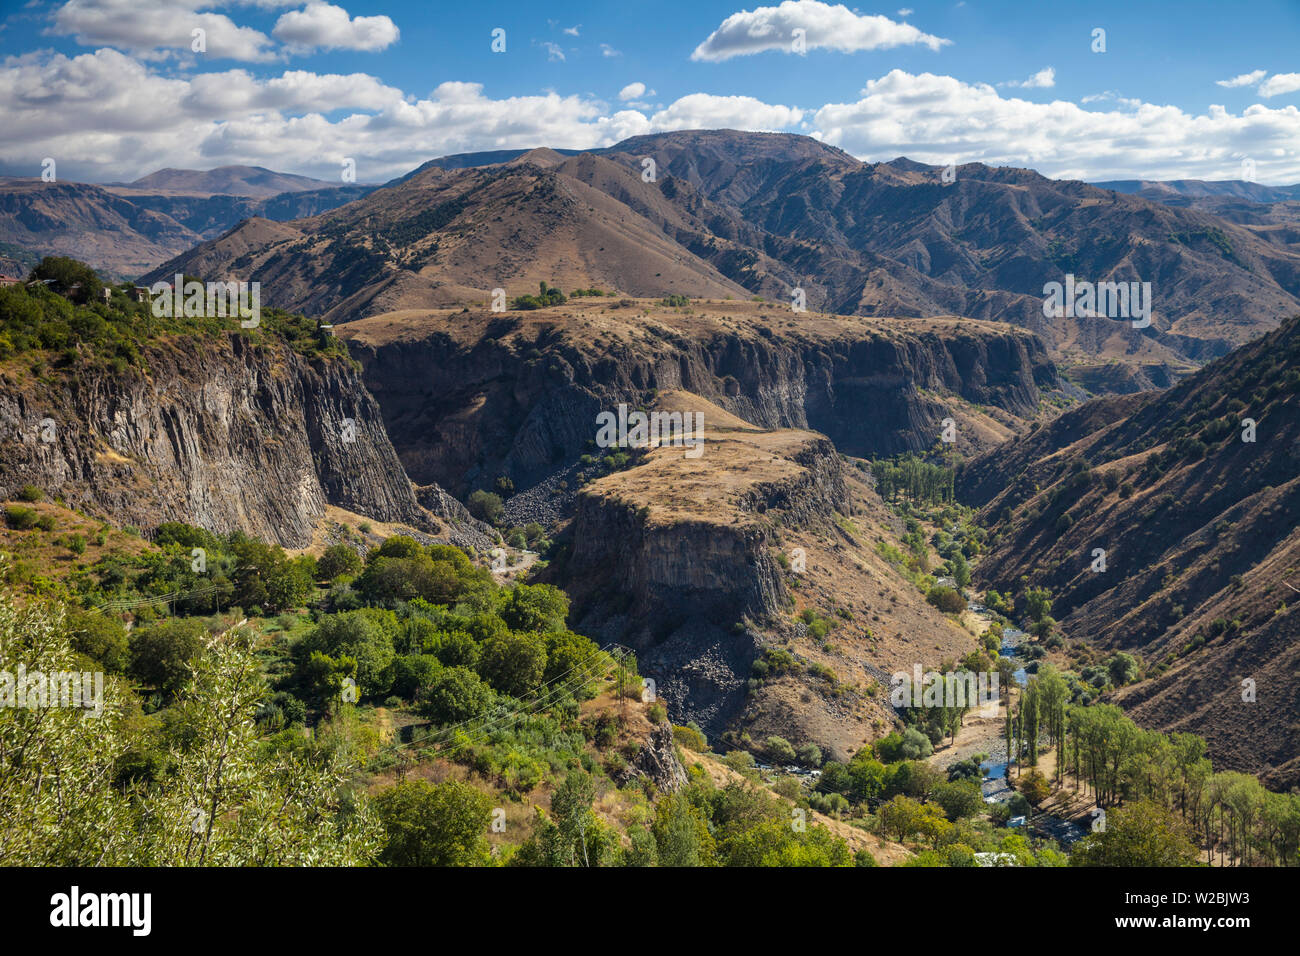 Armenia, Yerevan, Mountainous scenery viewed from Garni temple Stock Photo